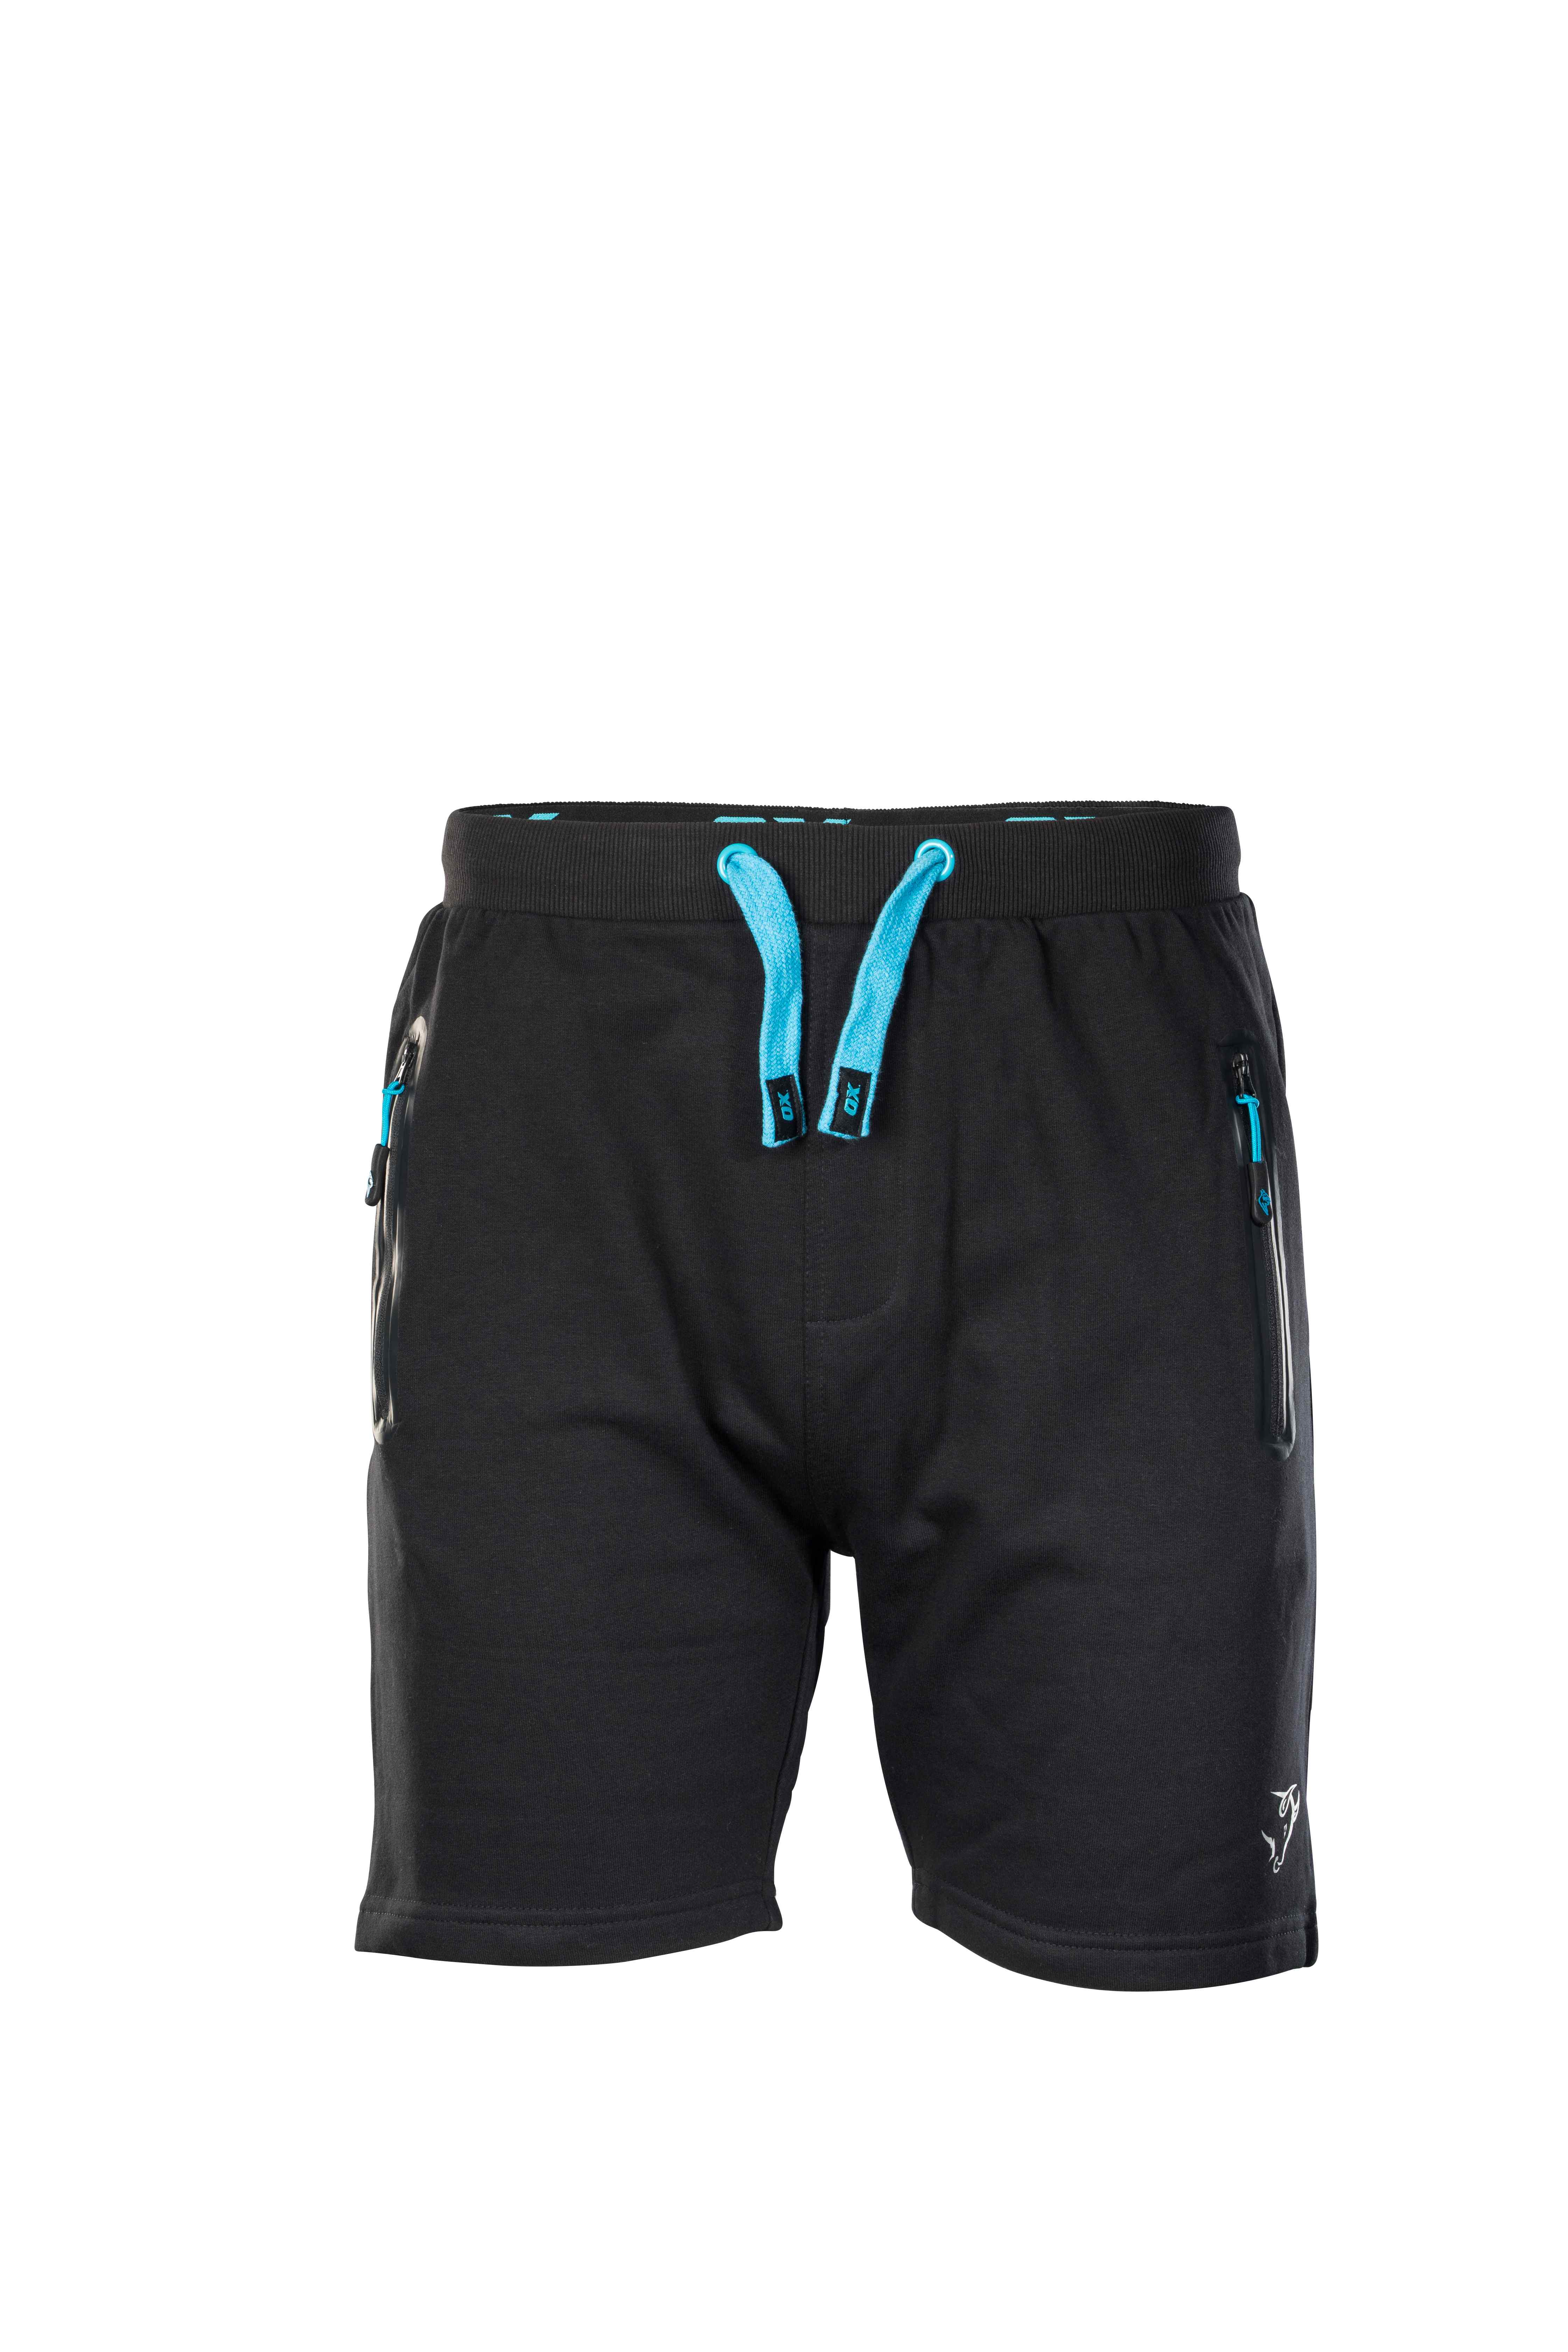 OX Jogger Shorts - Black - 36